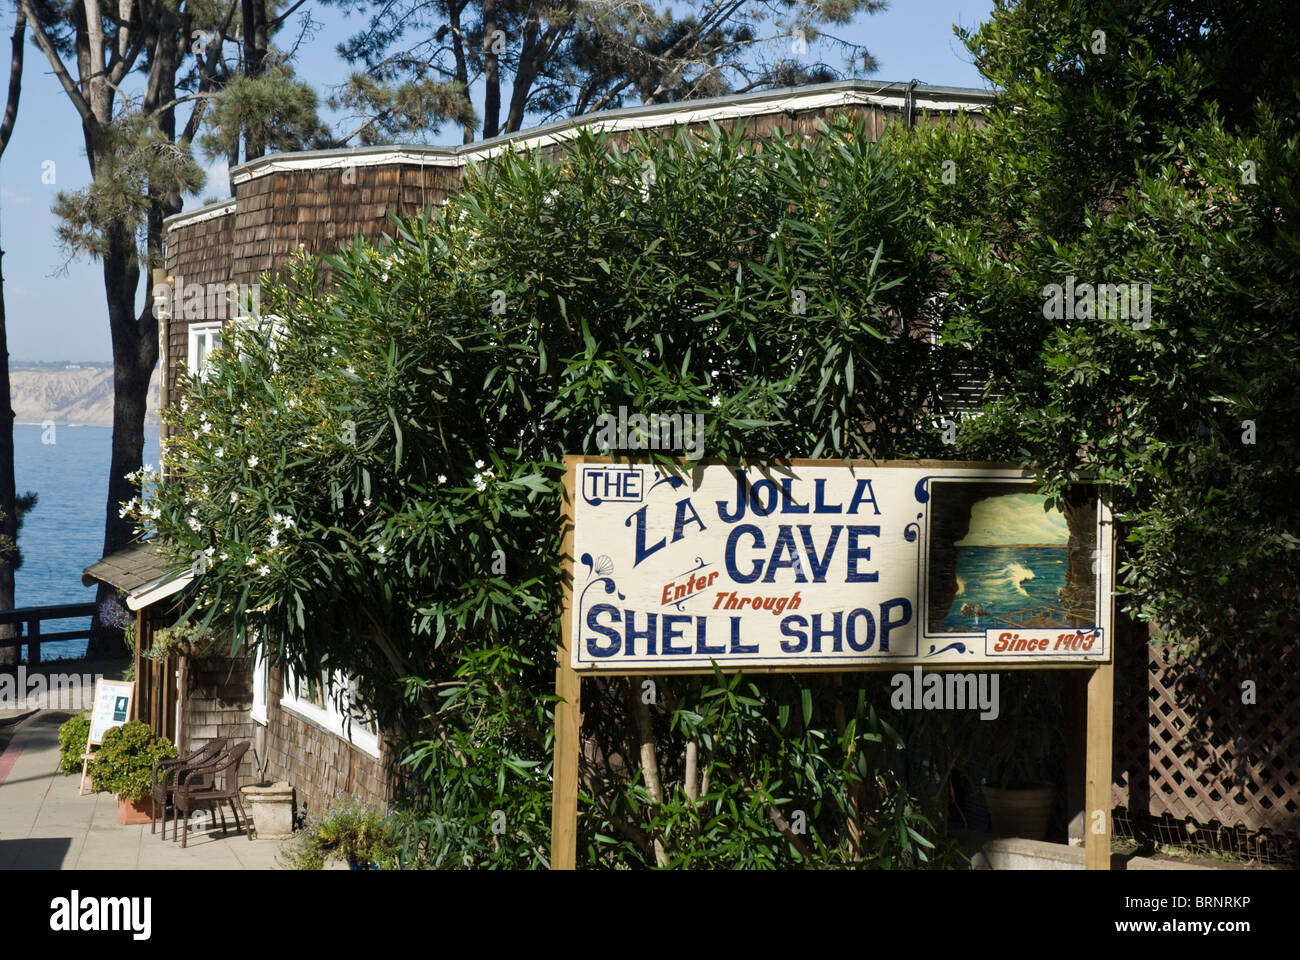 The Cave Store, entrance to Sunny Jim's Cave, at La Jolla, California, USA Stock Photo